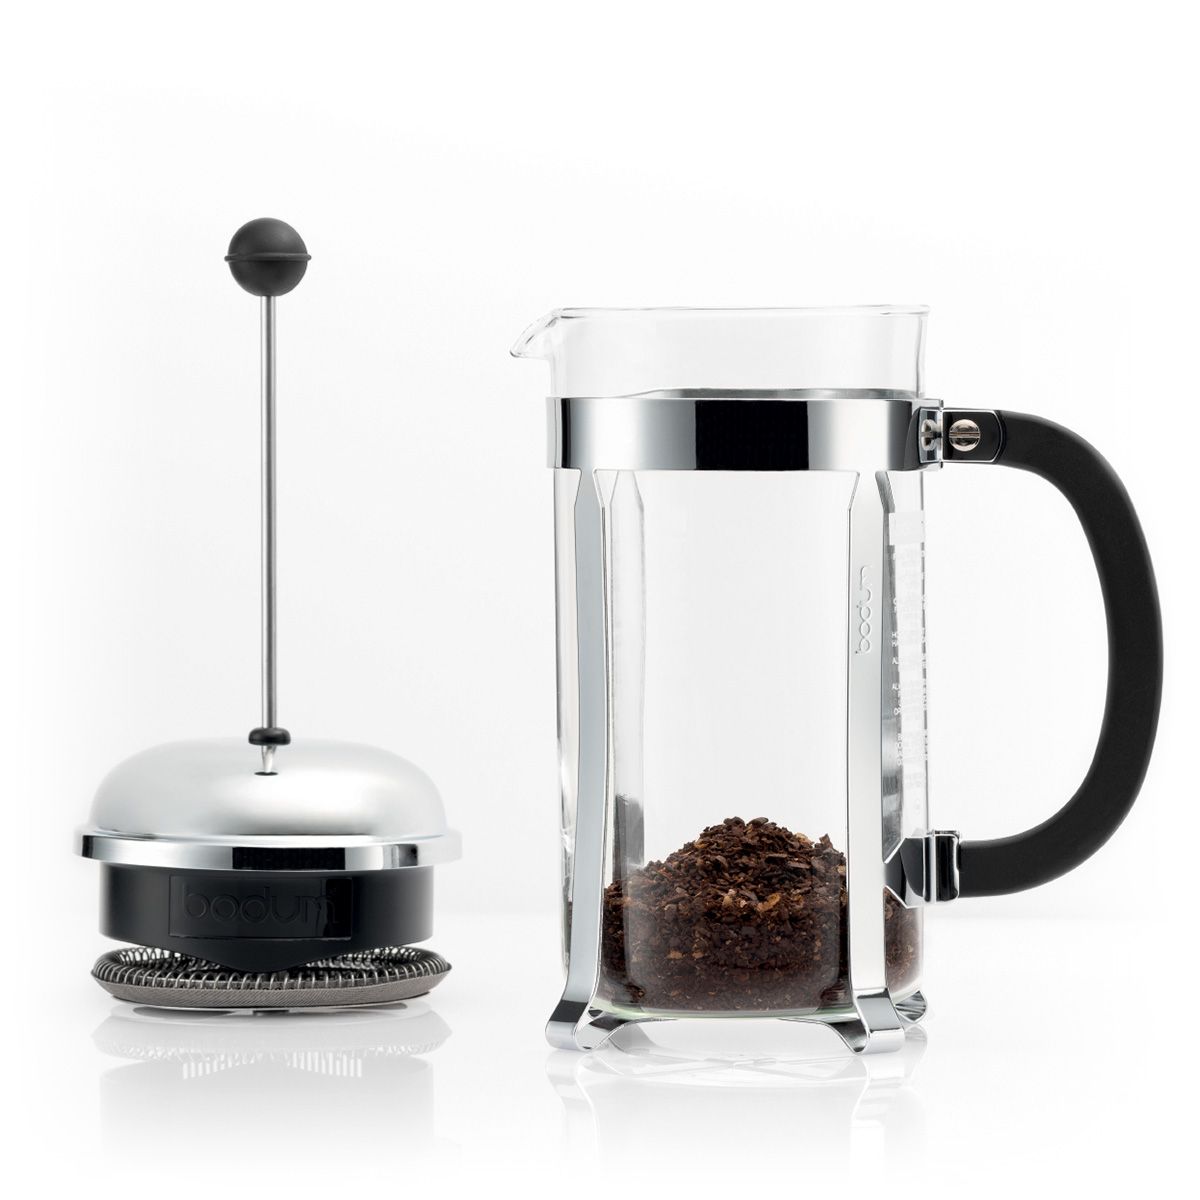 Bodum 8 Cup / 34oz Pour Over Coffee Maker